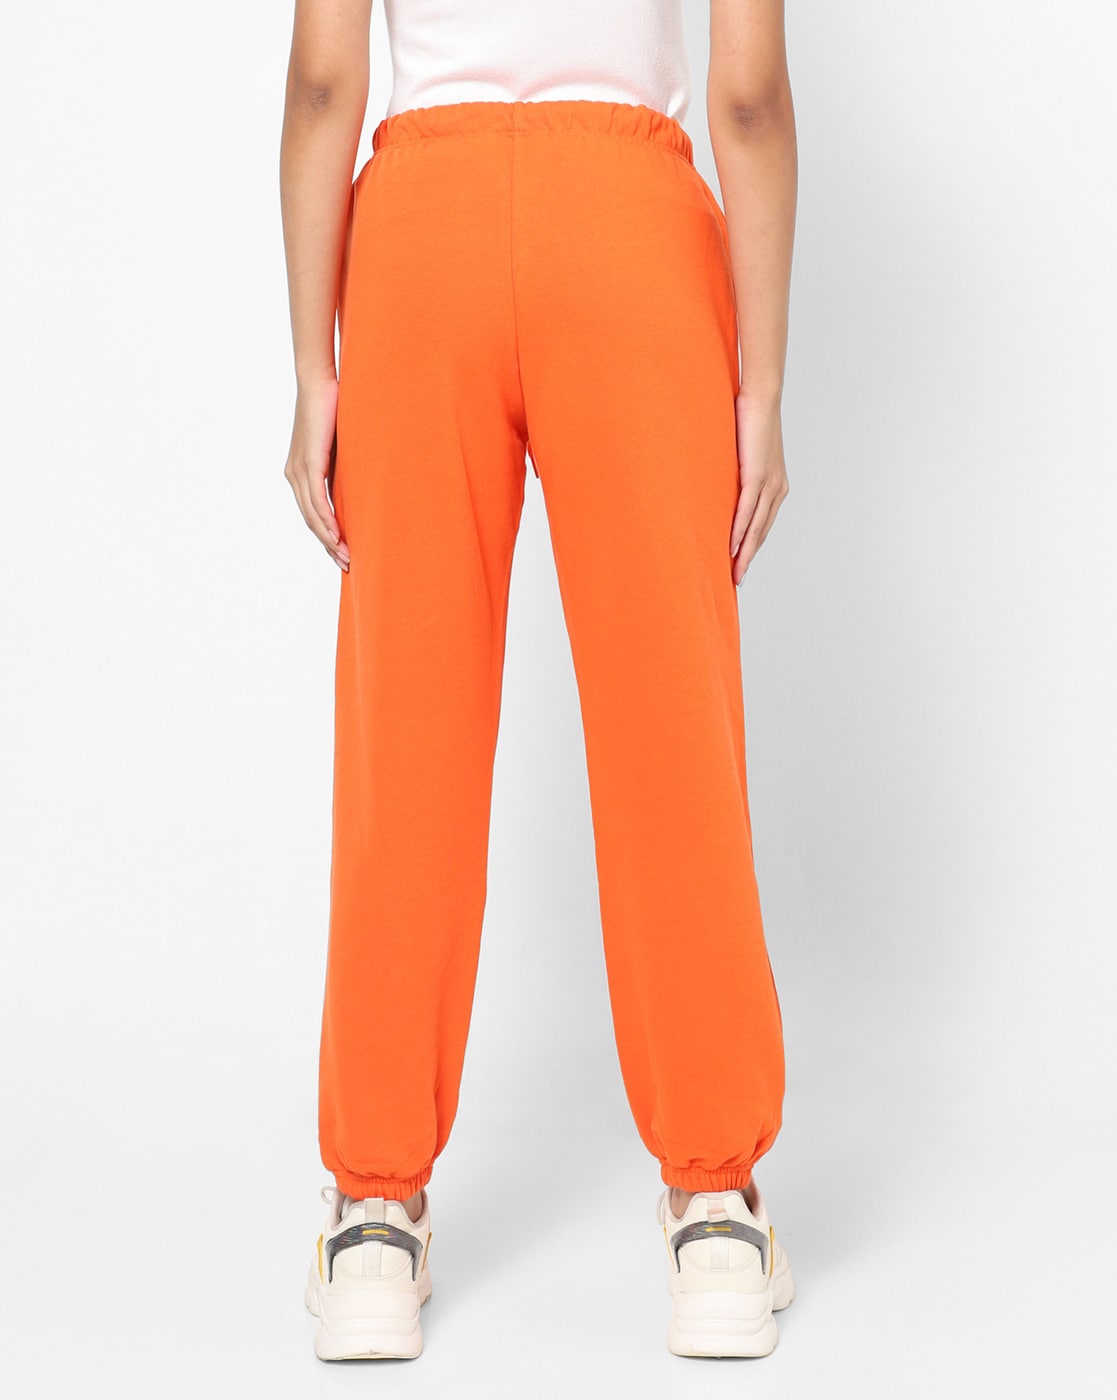 Buy Orange Trousers & Pants for Women by LEVIS Online 